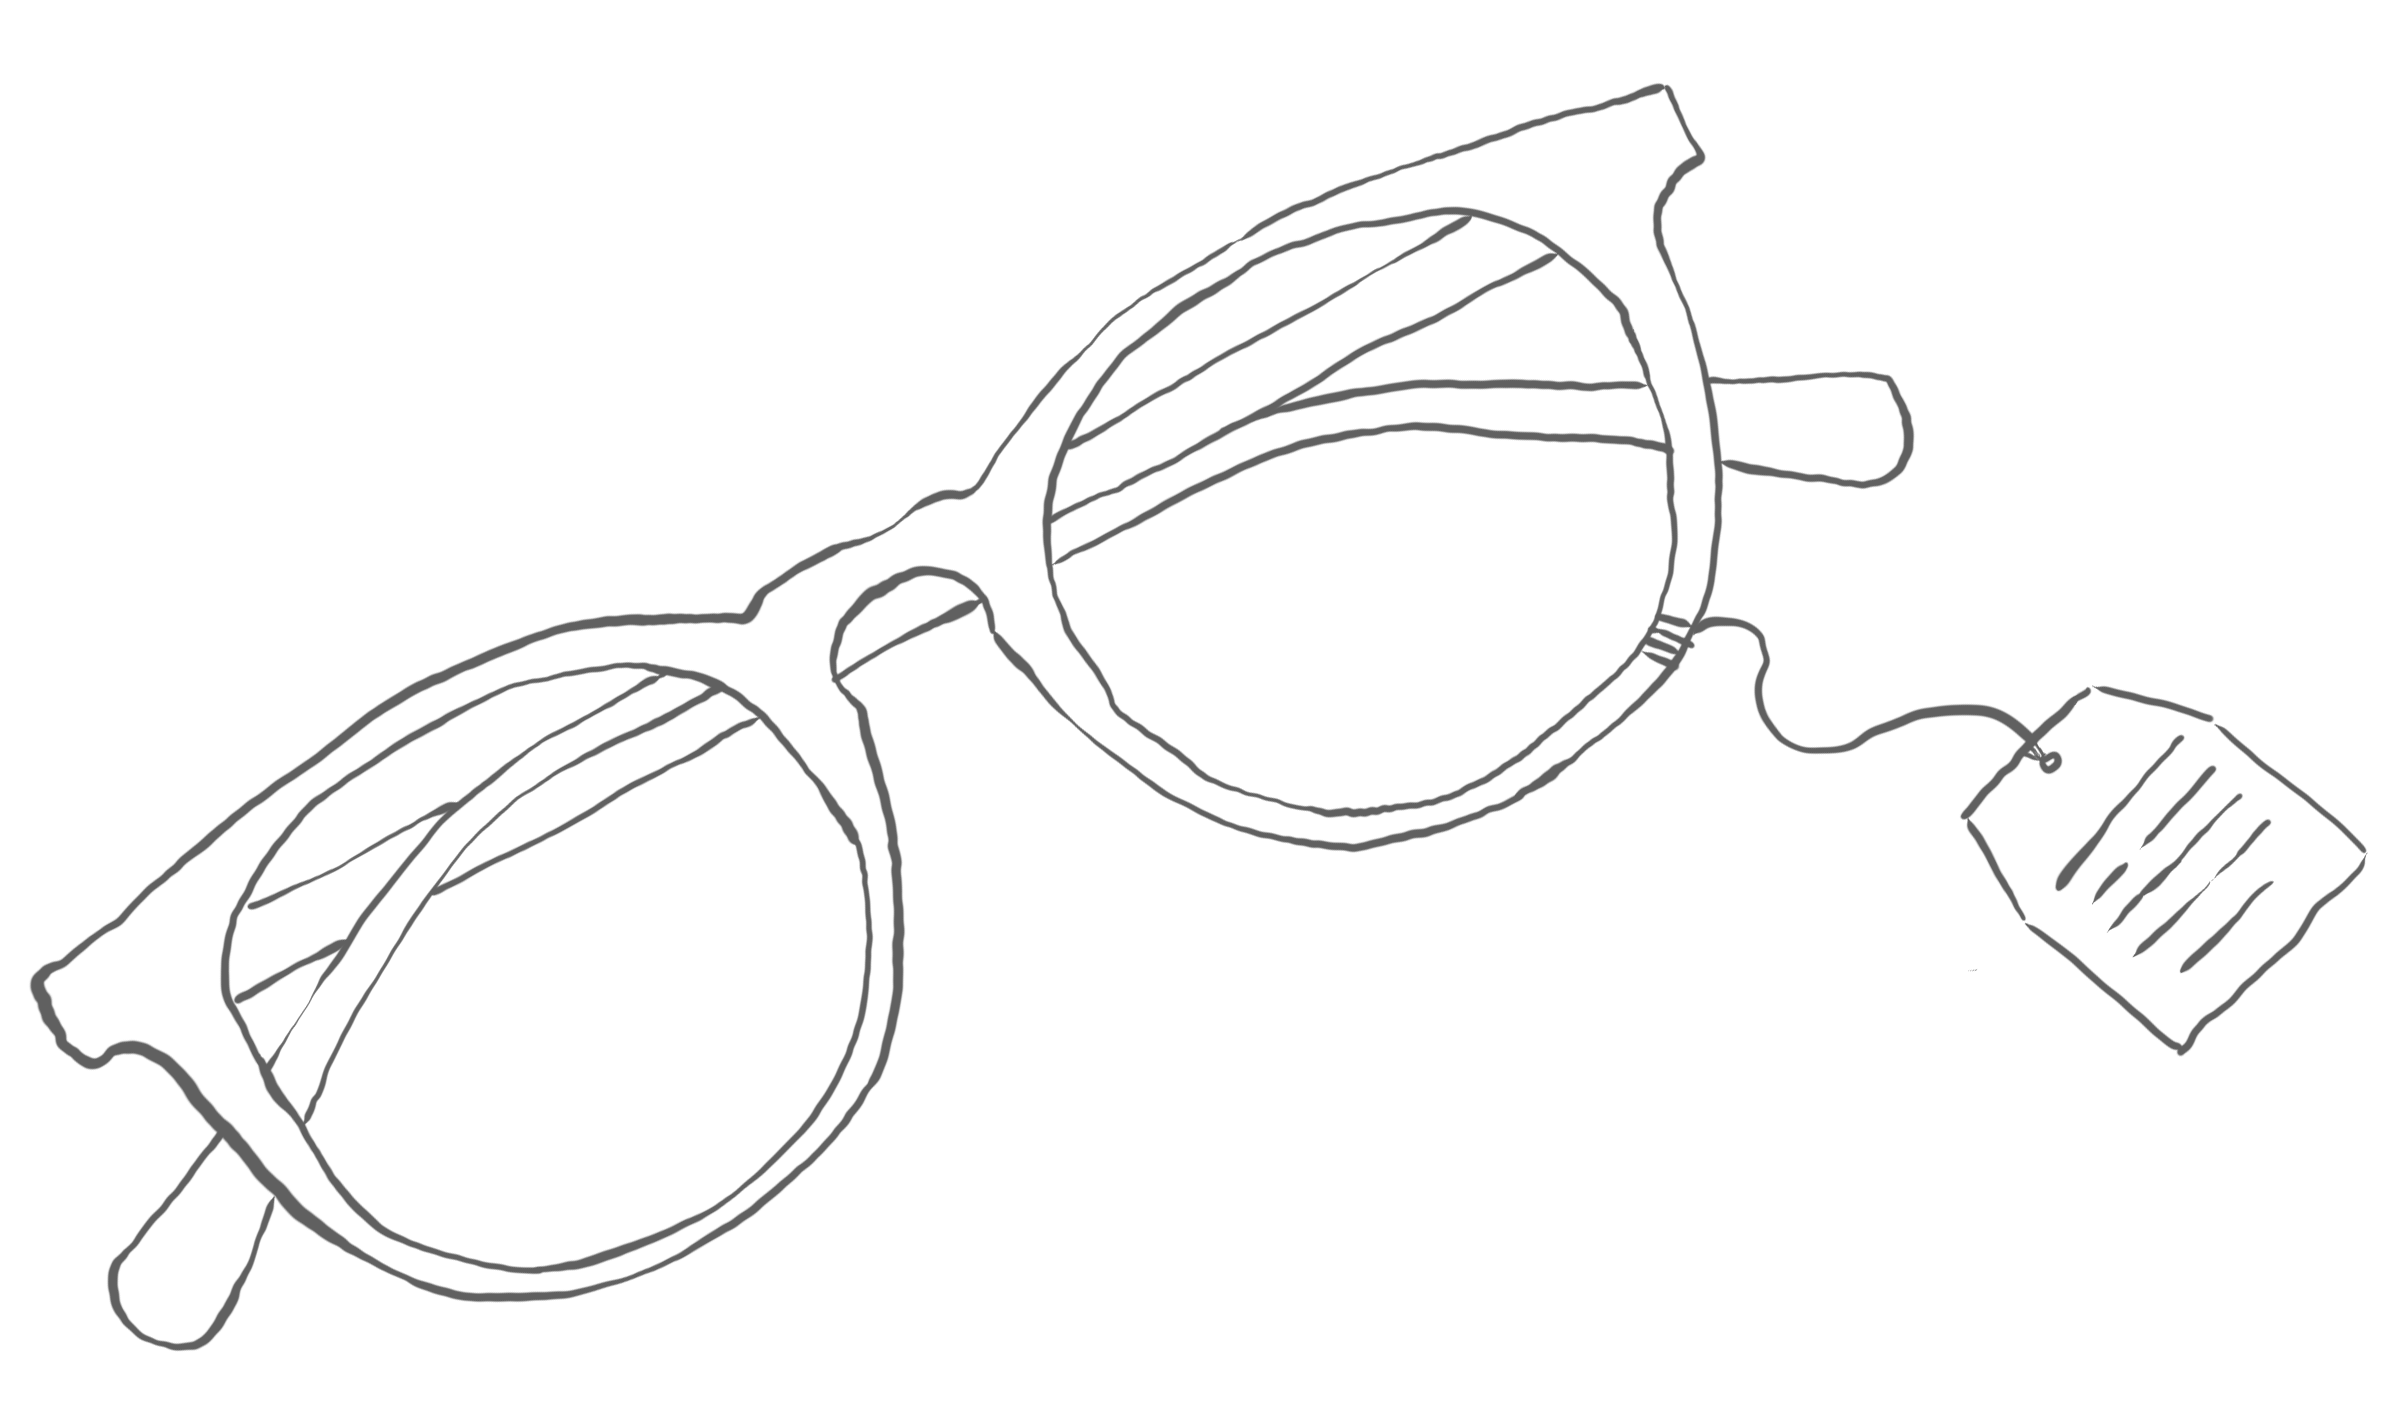 goggles clipart sketch